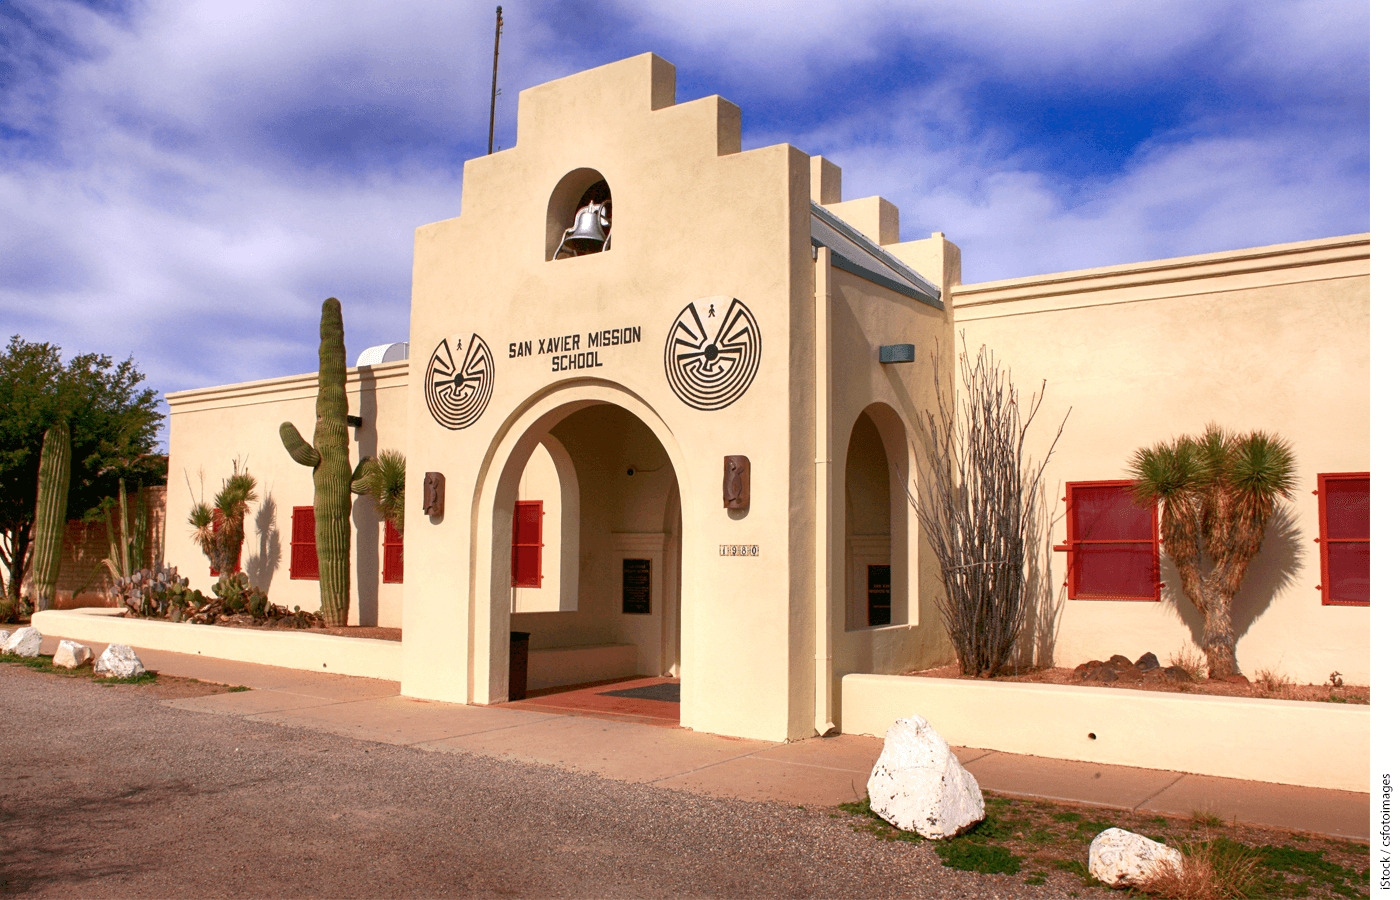 Exterior of the San Xavier Mission School in Tucson AZ